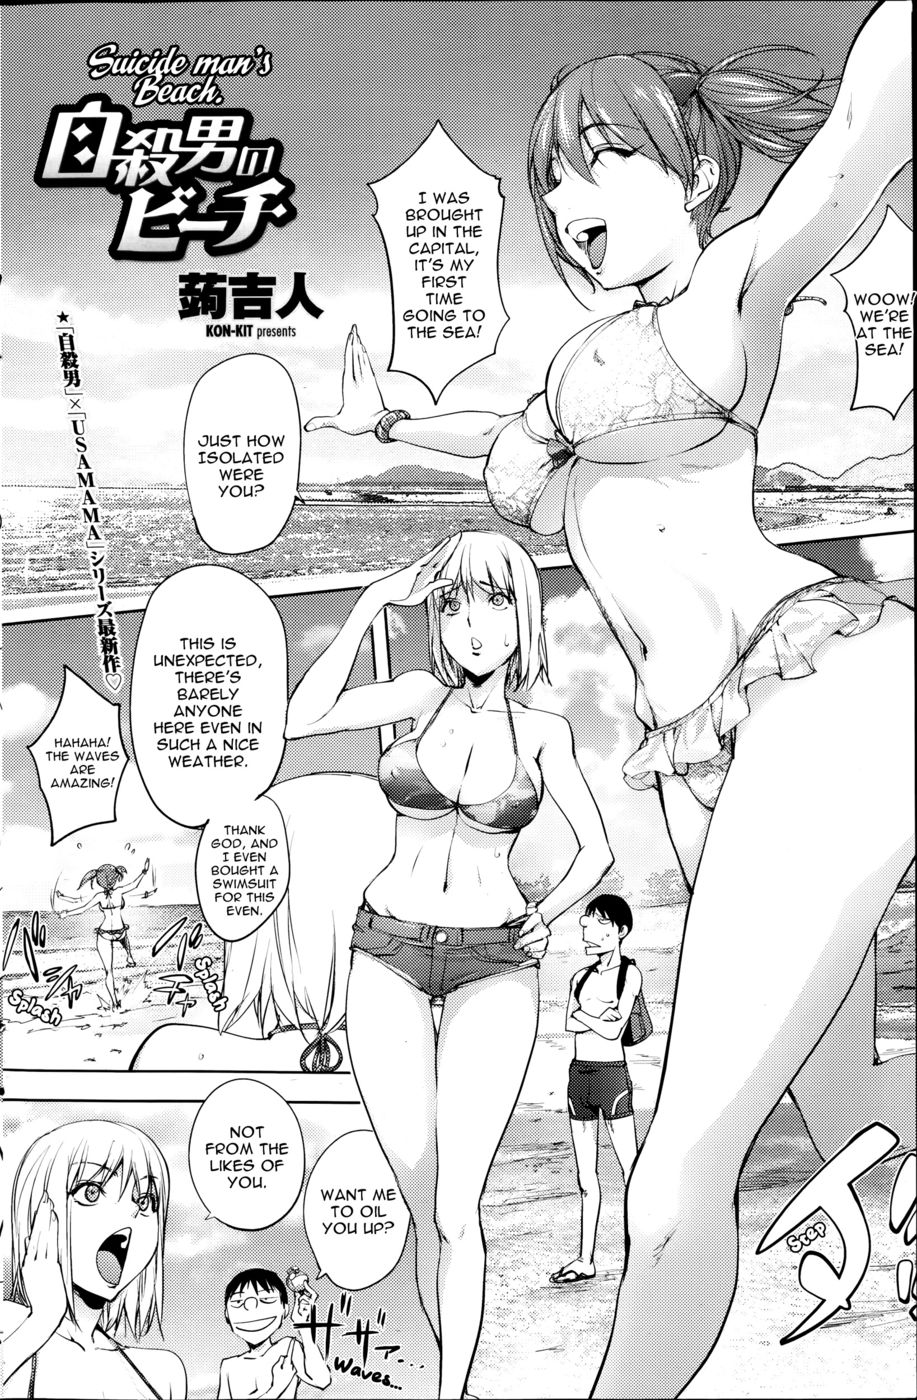 Hentai Manga Comic-Suicide Man's Beach-Read-2